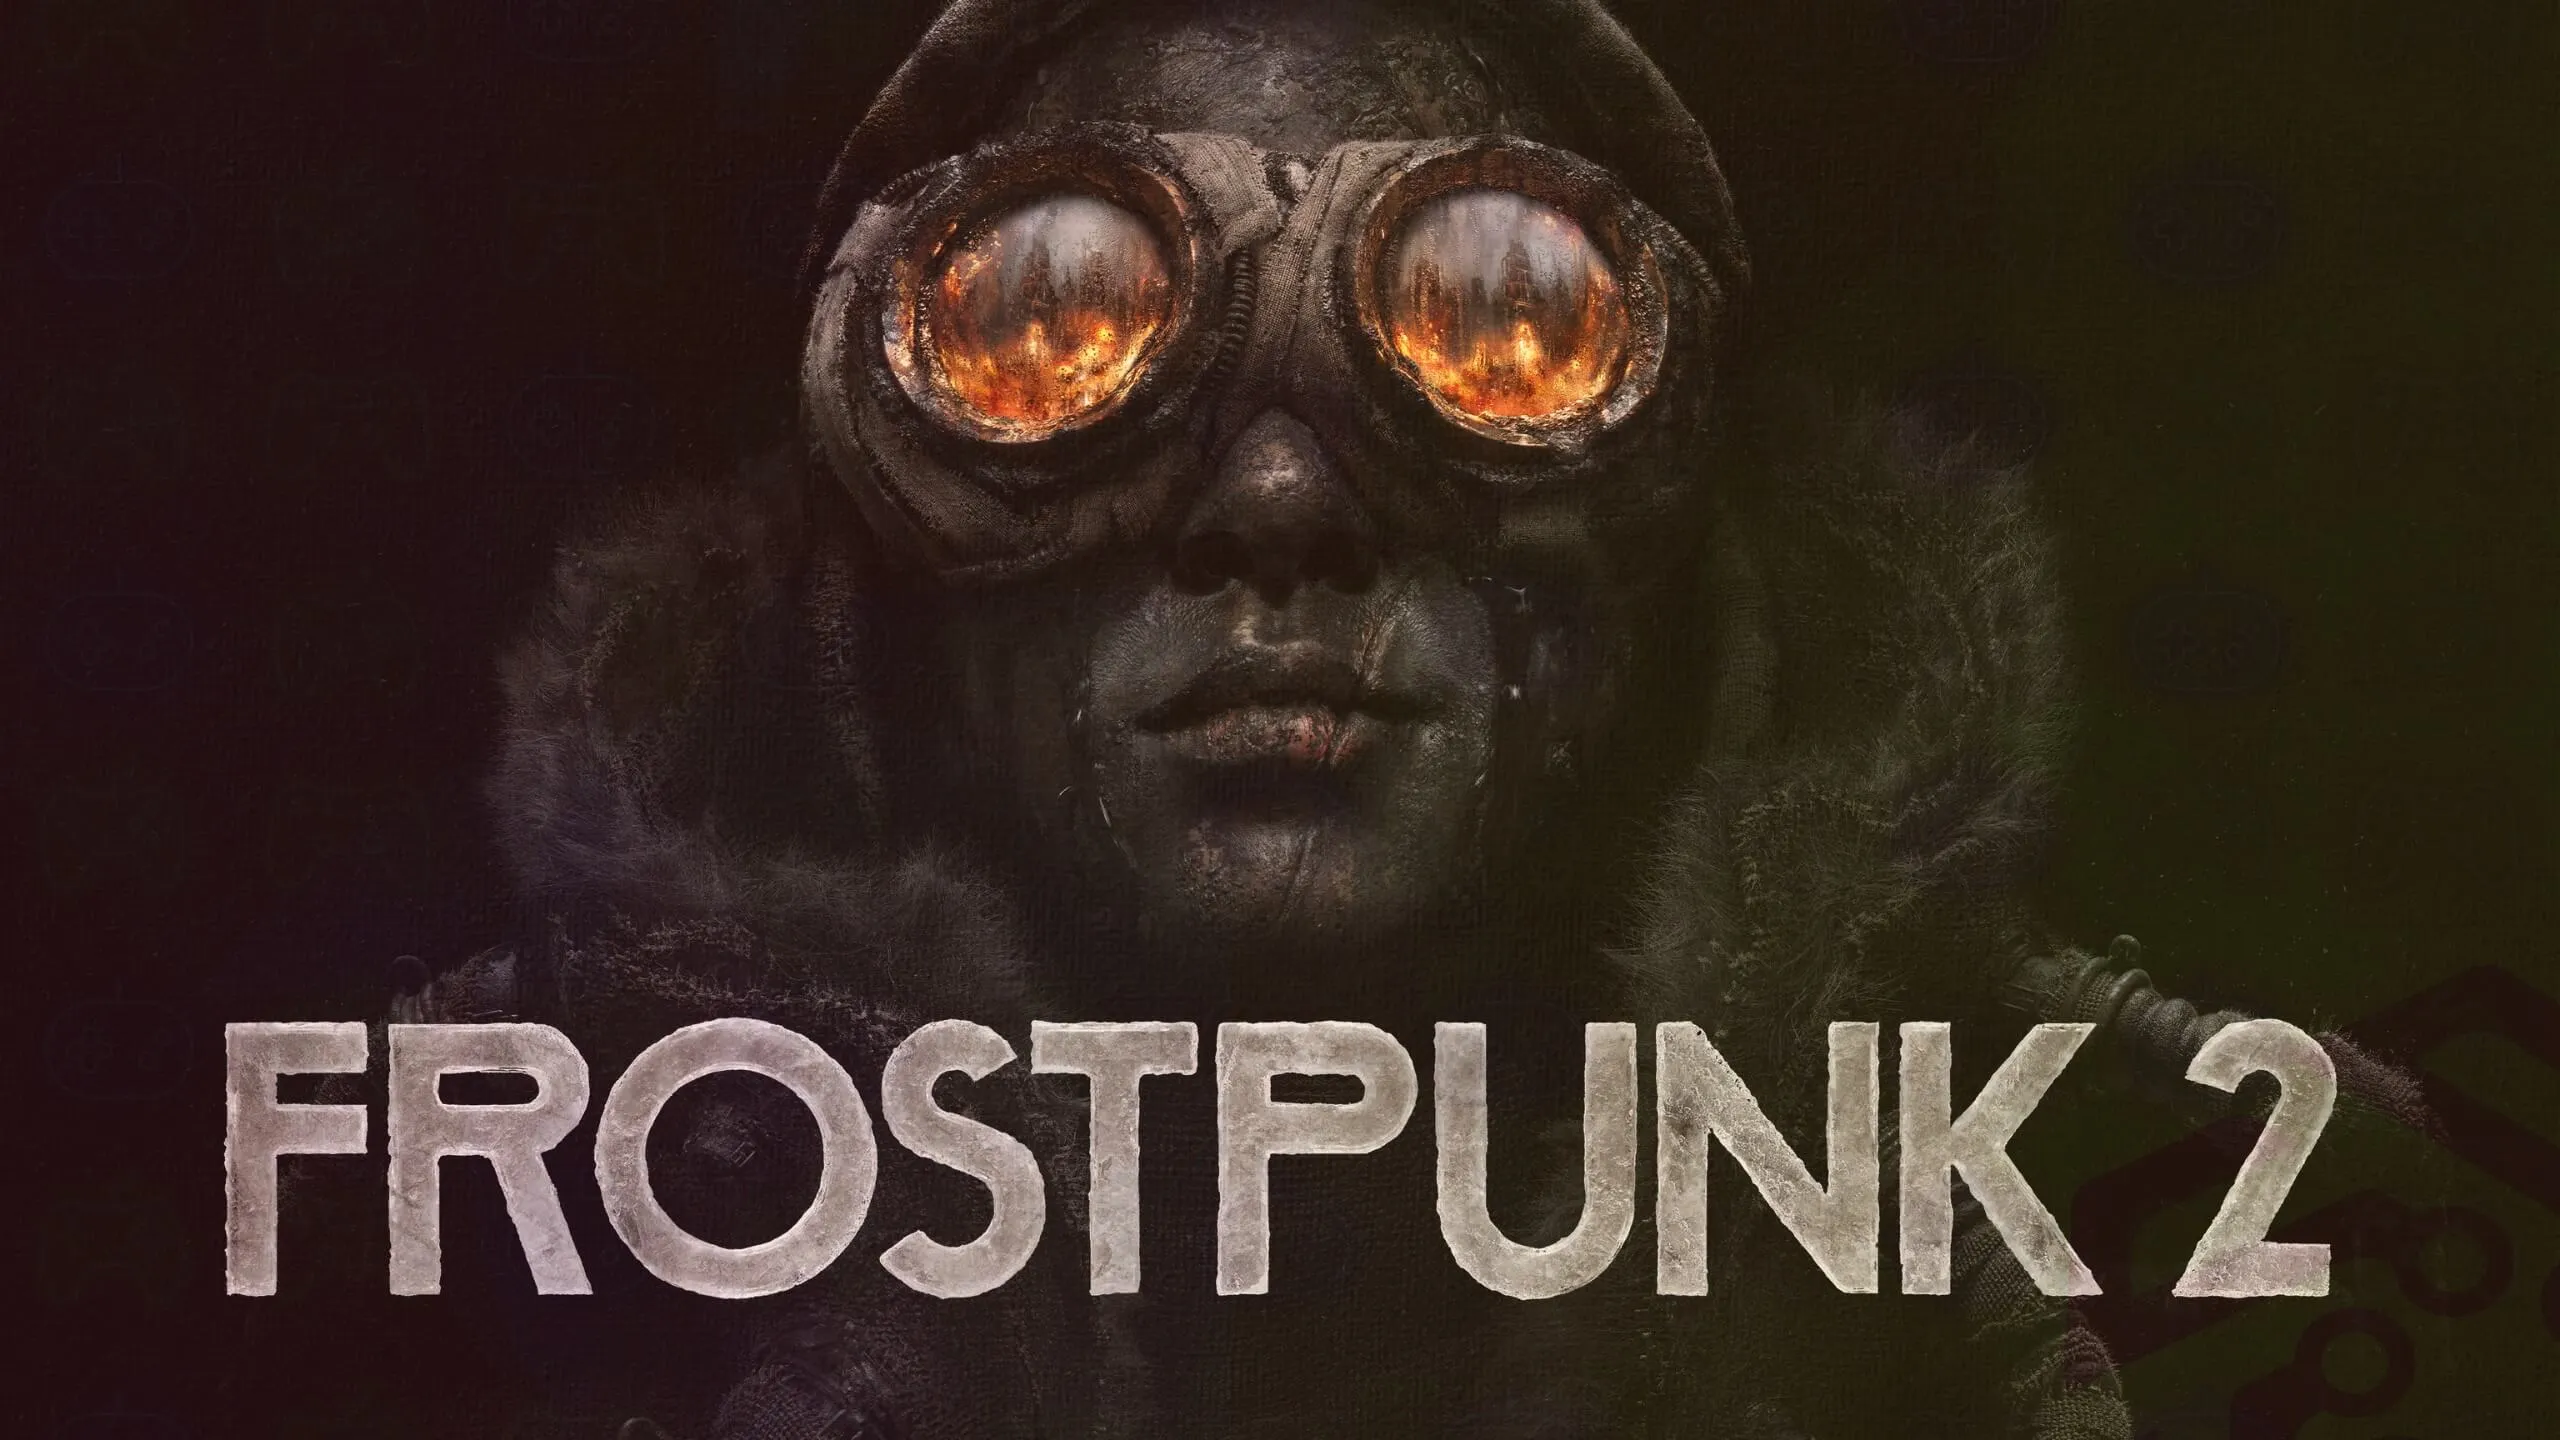 Frostpunk 2 key art with logo